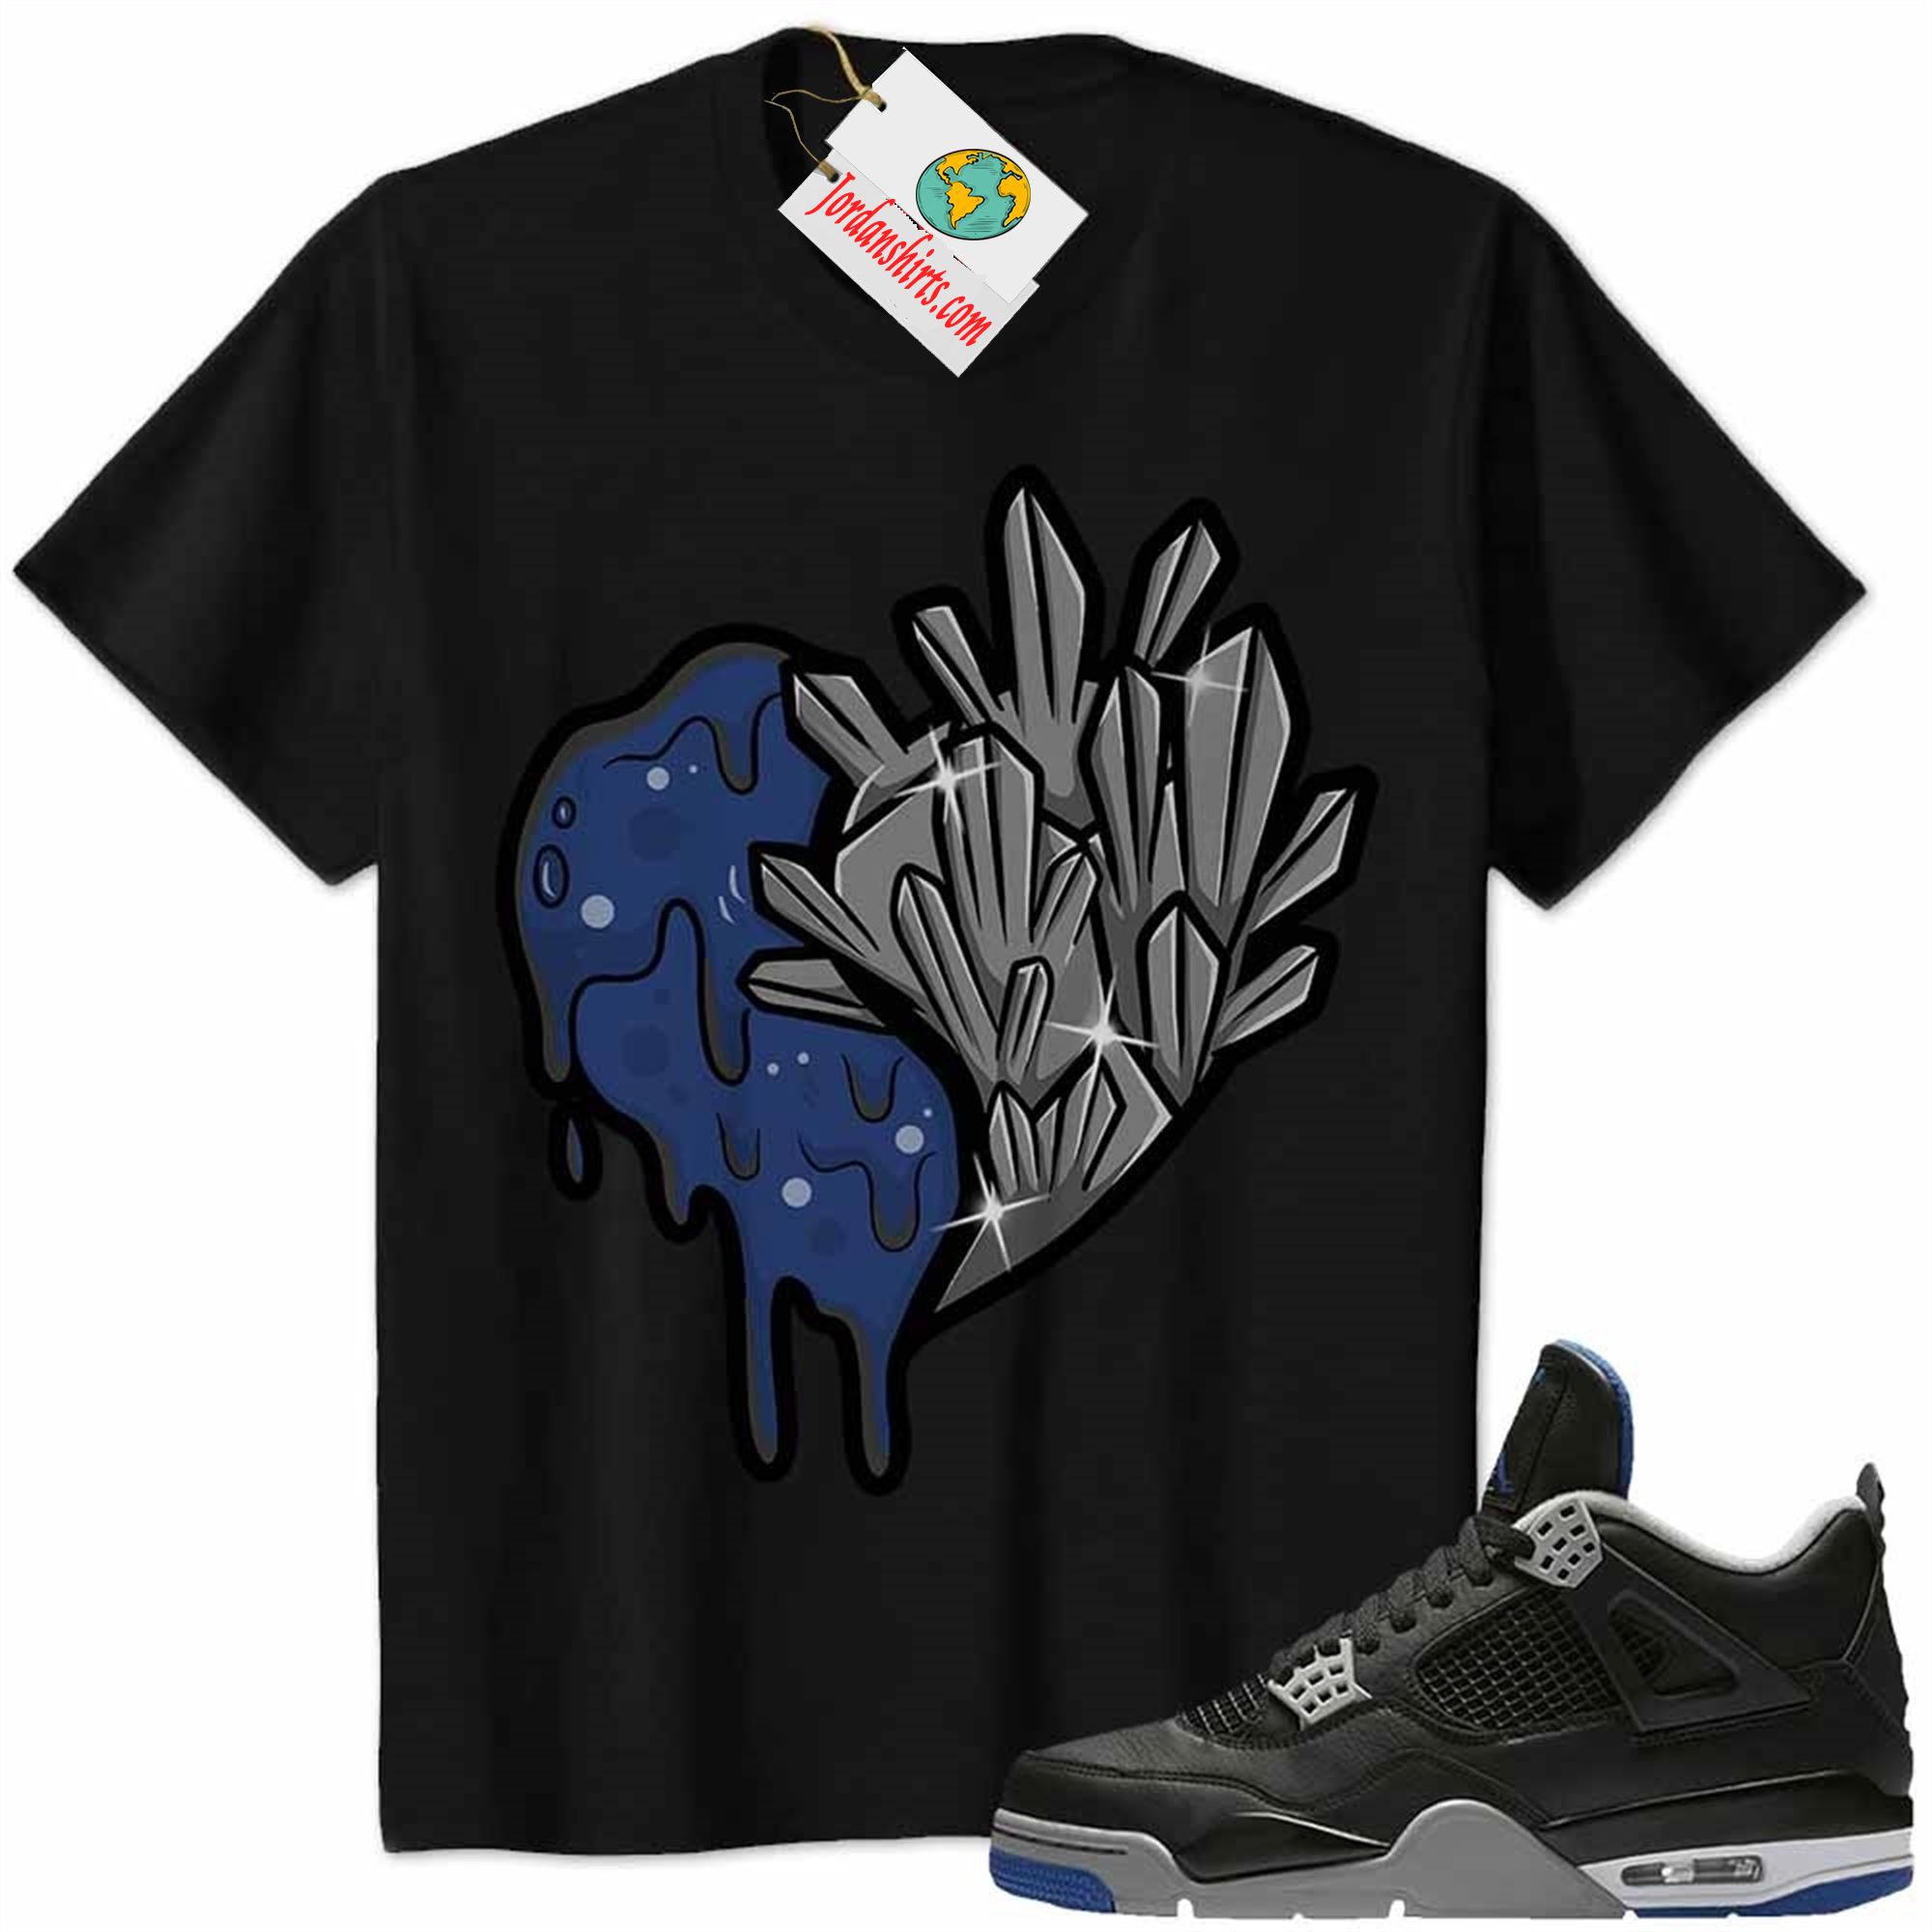 Jordan 4 Shirt, Crystal And Melt Heart Black Air Jordan 4 Motorsport Alternate 4s Full Size Up To 5xl